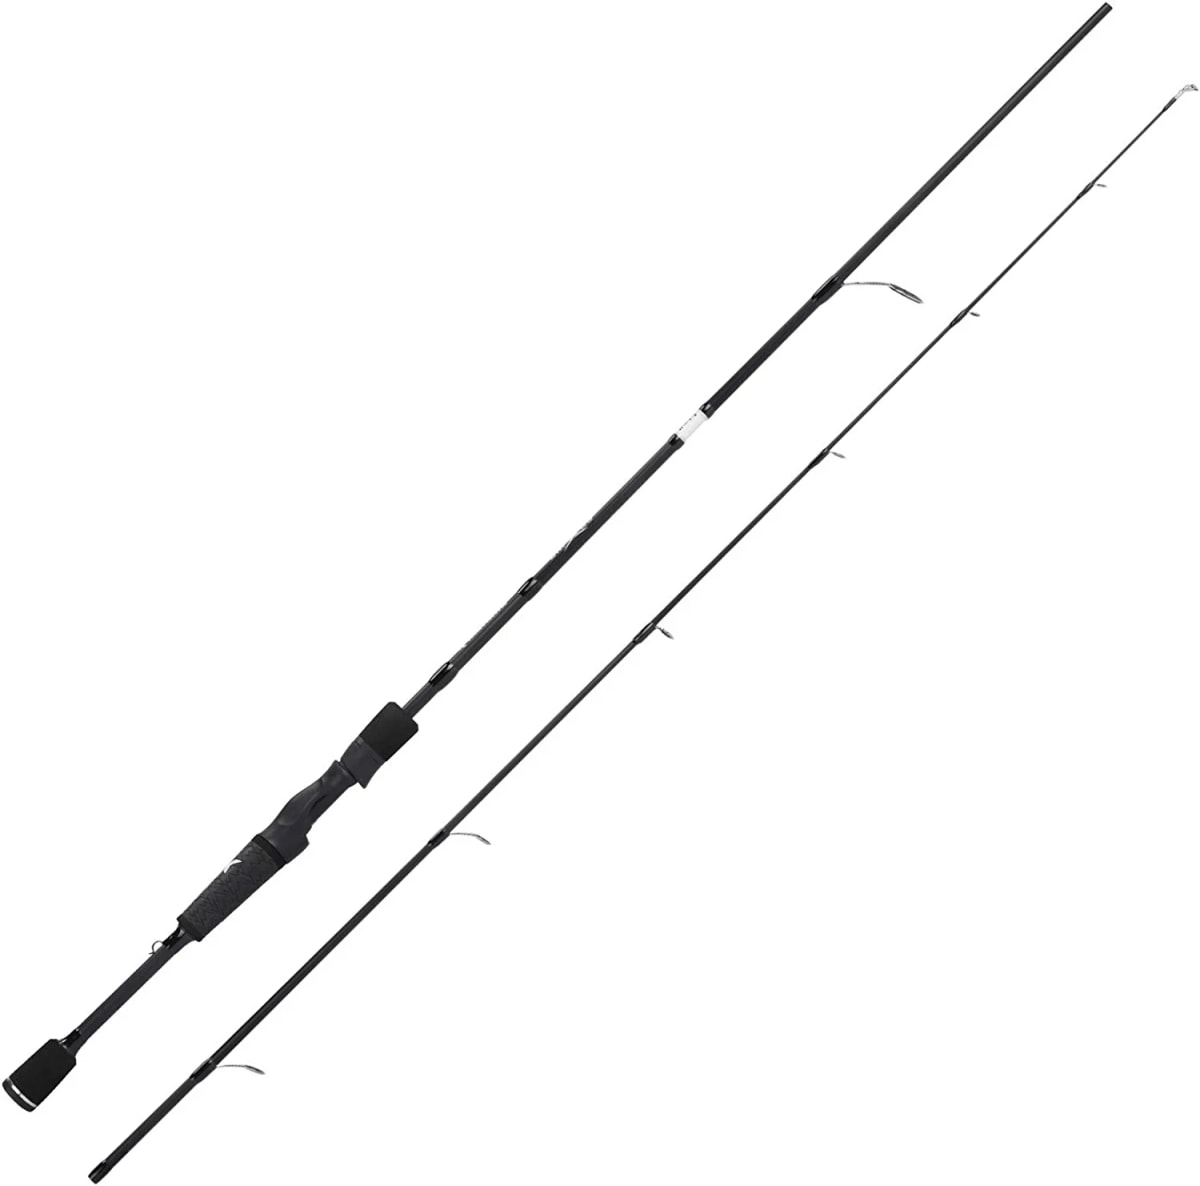 IM6 Graphite Spinning Rod & Casting Rod - Best ultra light fishing rods ...